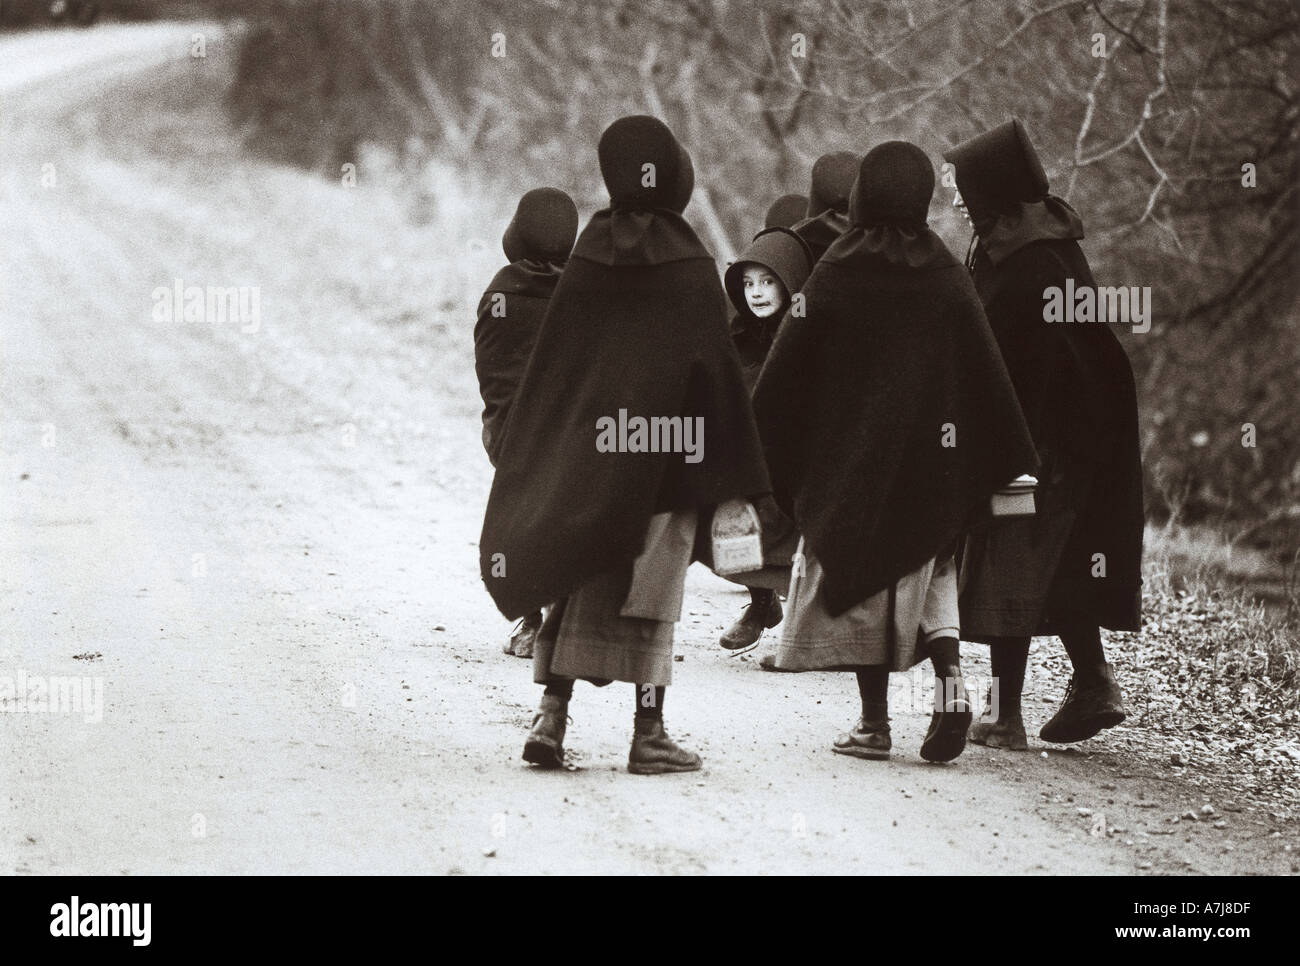 Amish schoolchildren in New York state USA Stock Photo